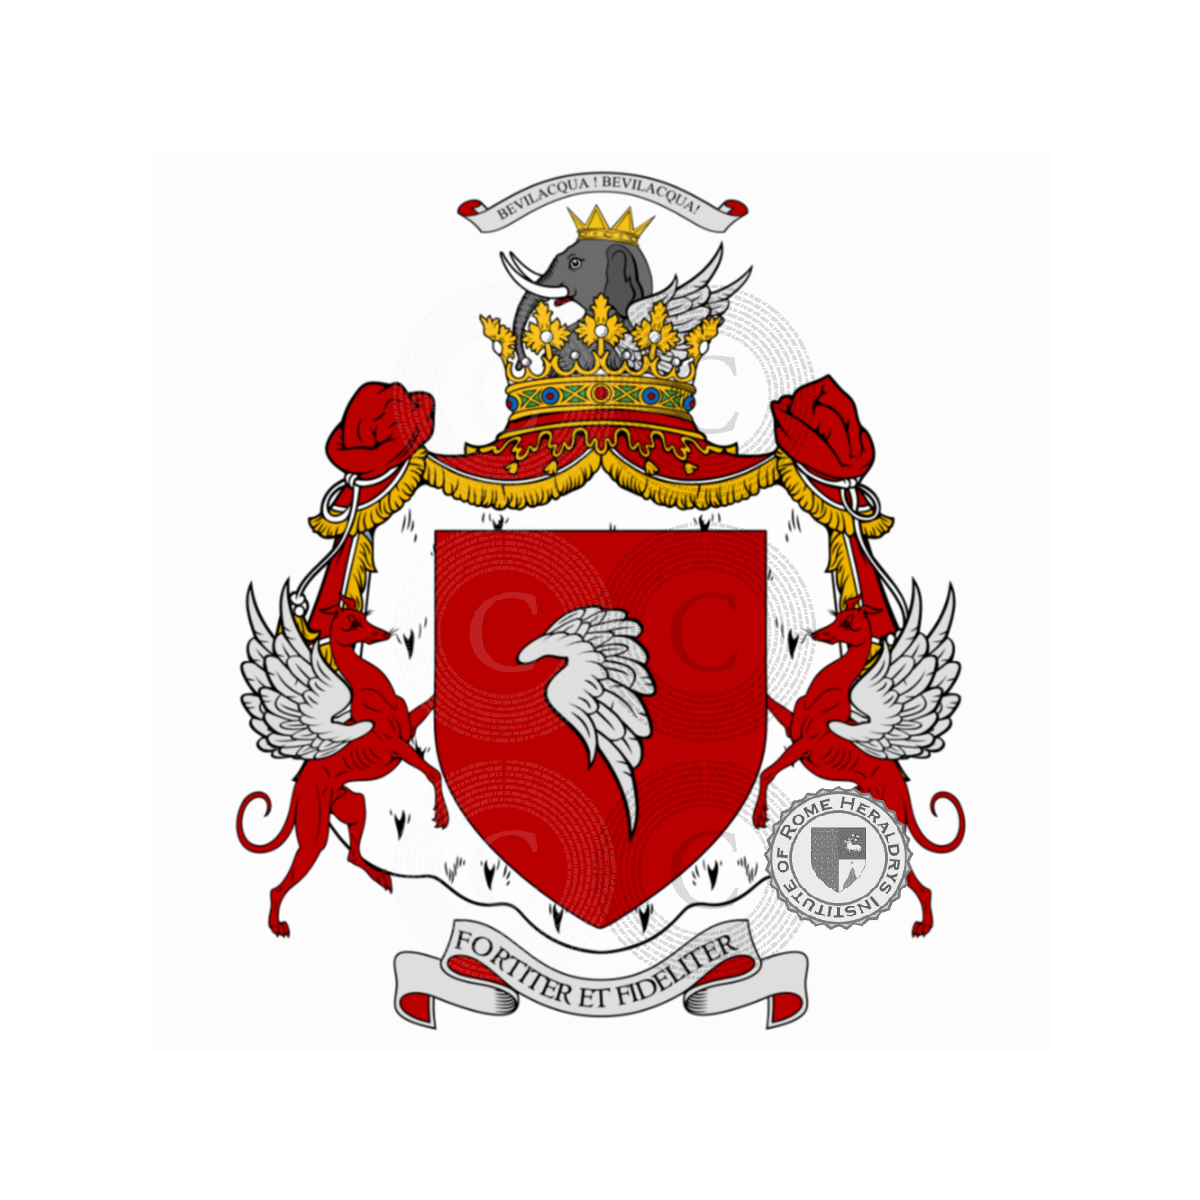 Wappen der FamilieBevilacqua, Bevi Laqua,Bevilacqua